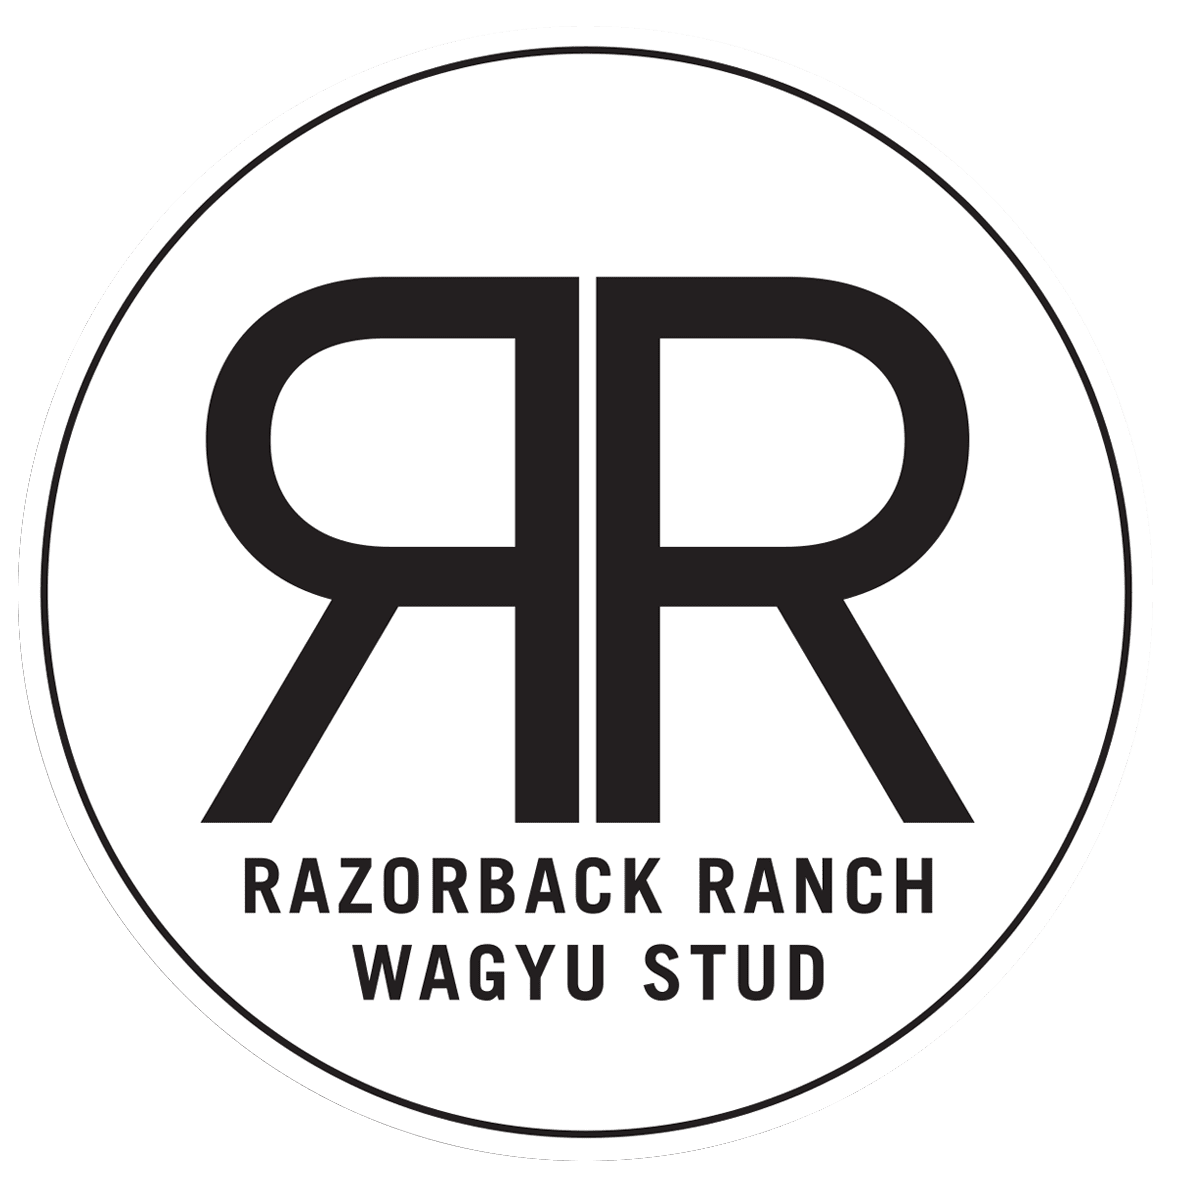 Razorback Ranch Wagyu Stud